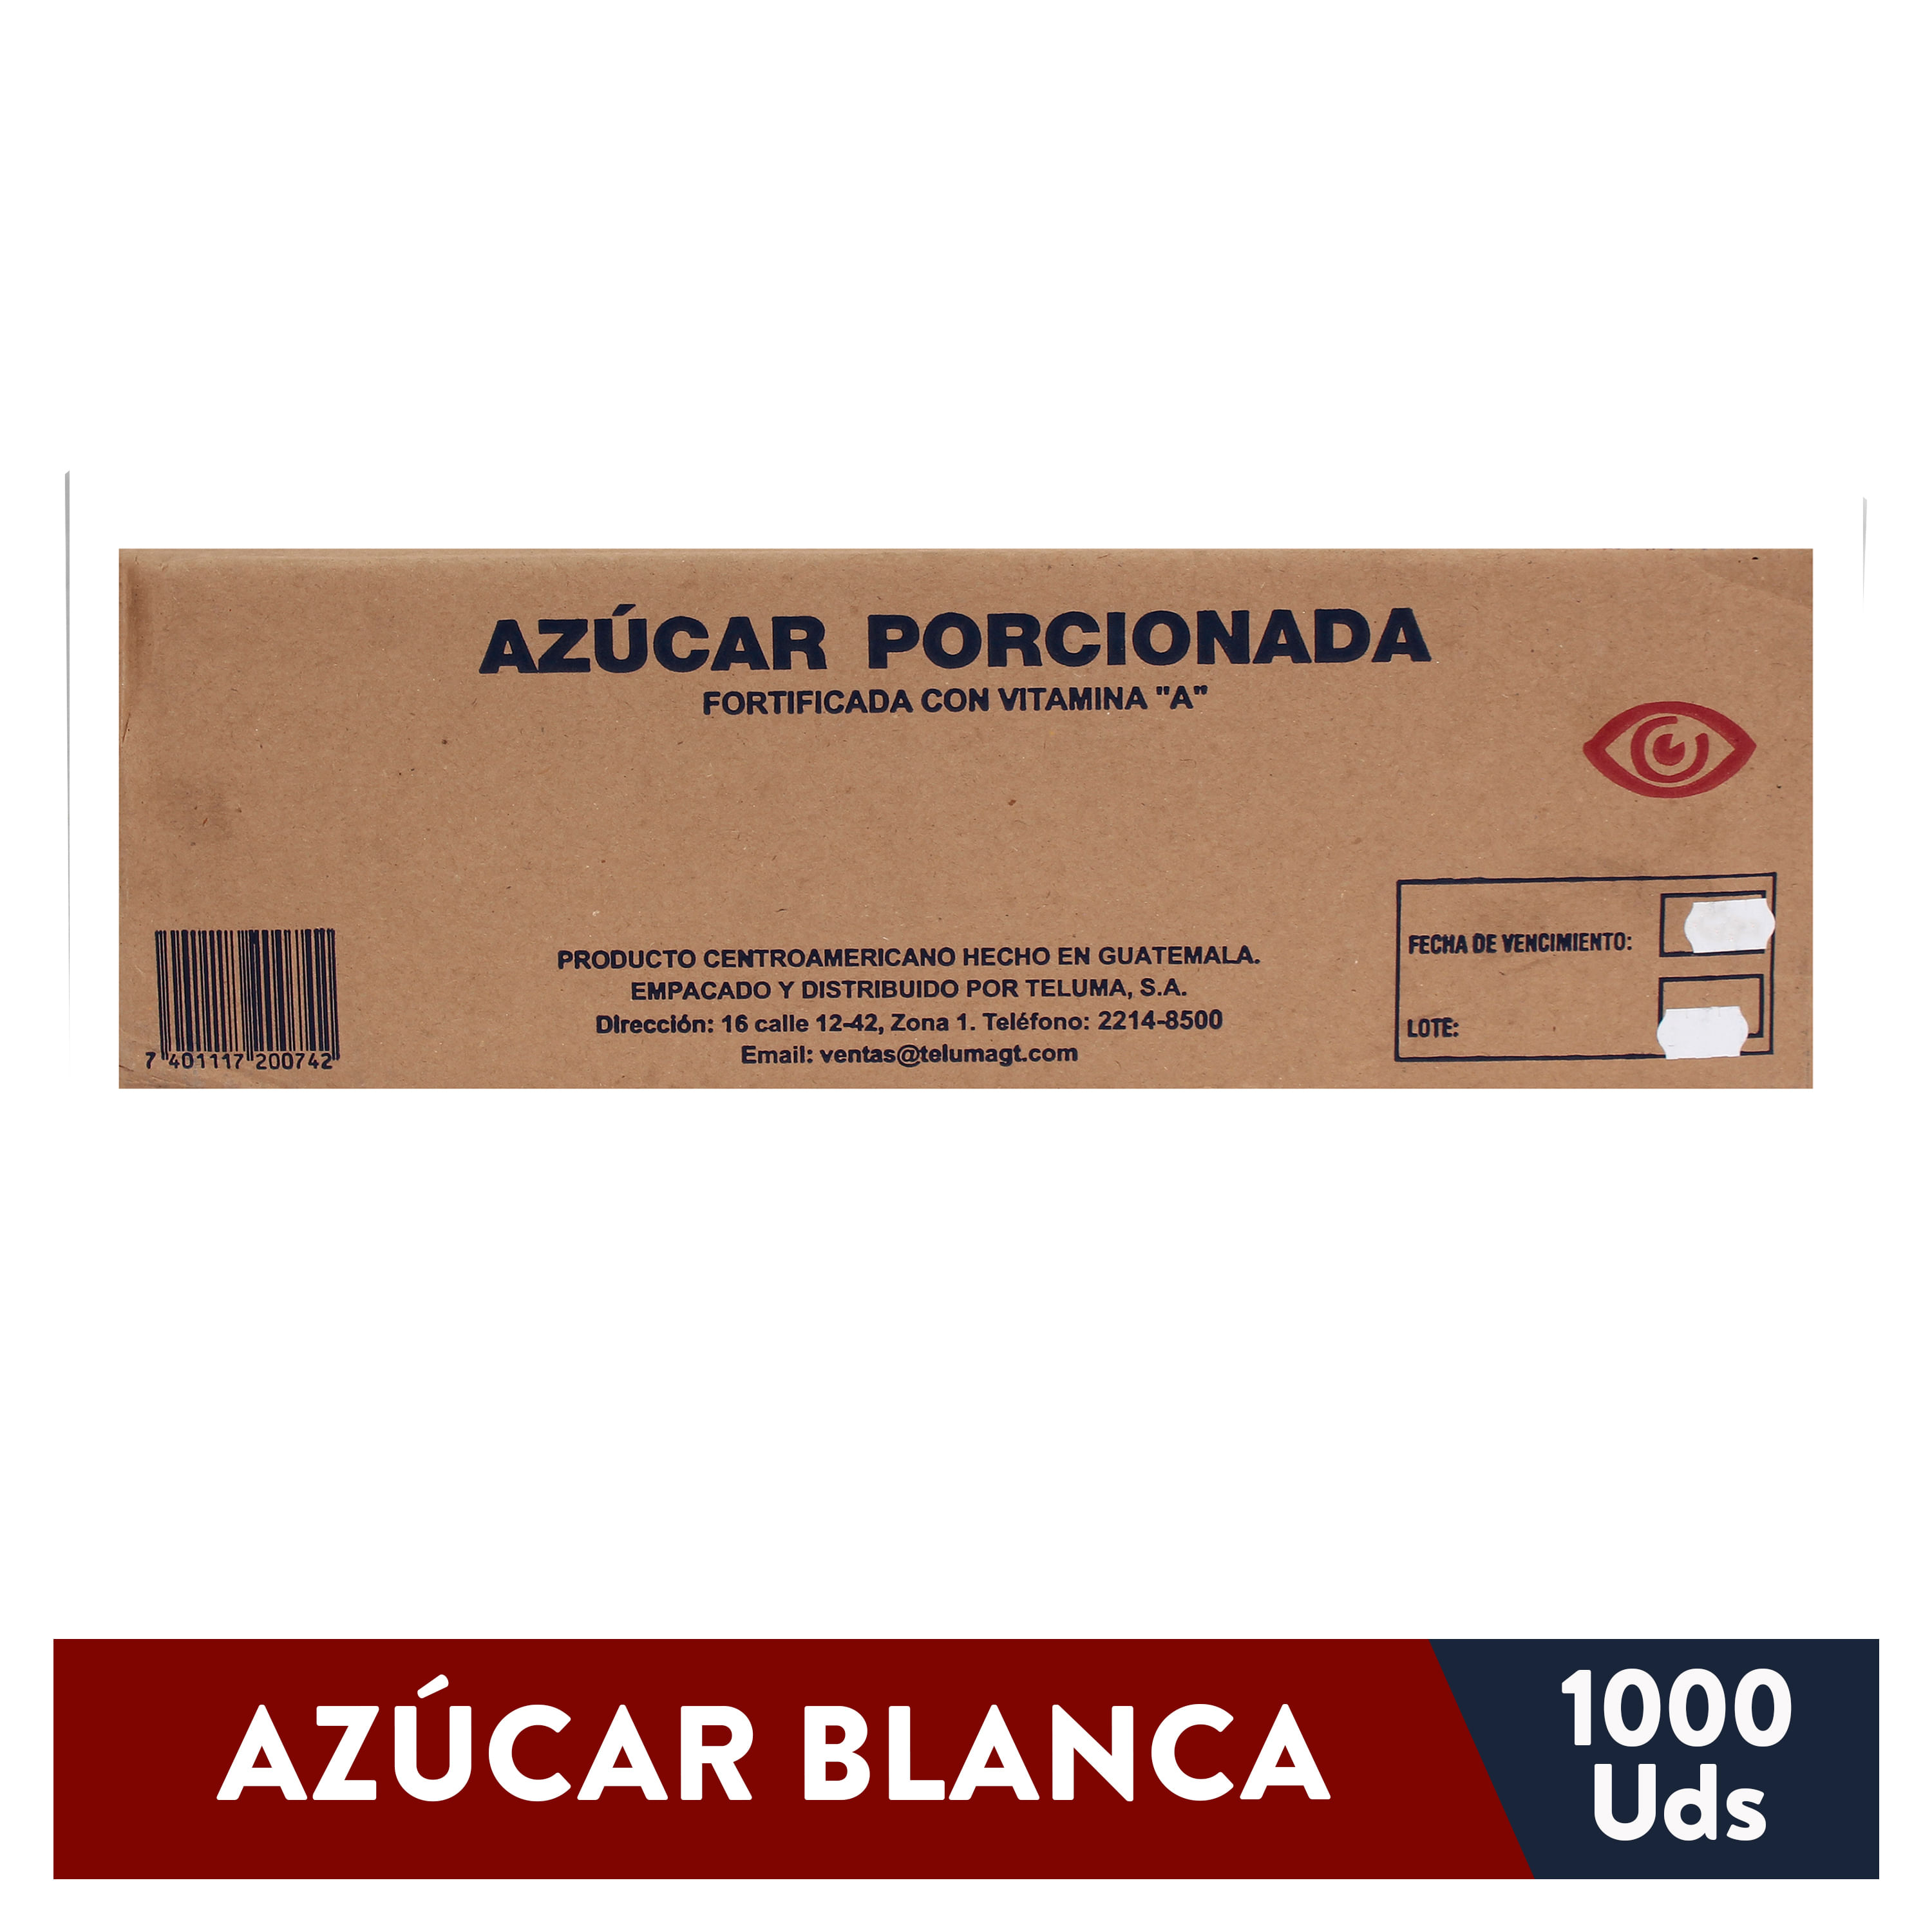 Azucar Yaesta Glass - 400gr